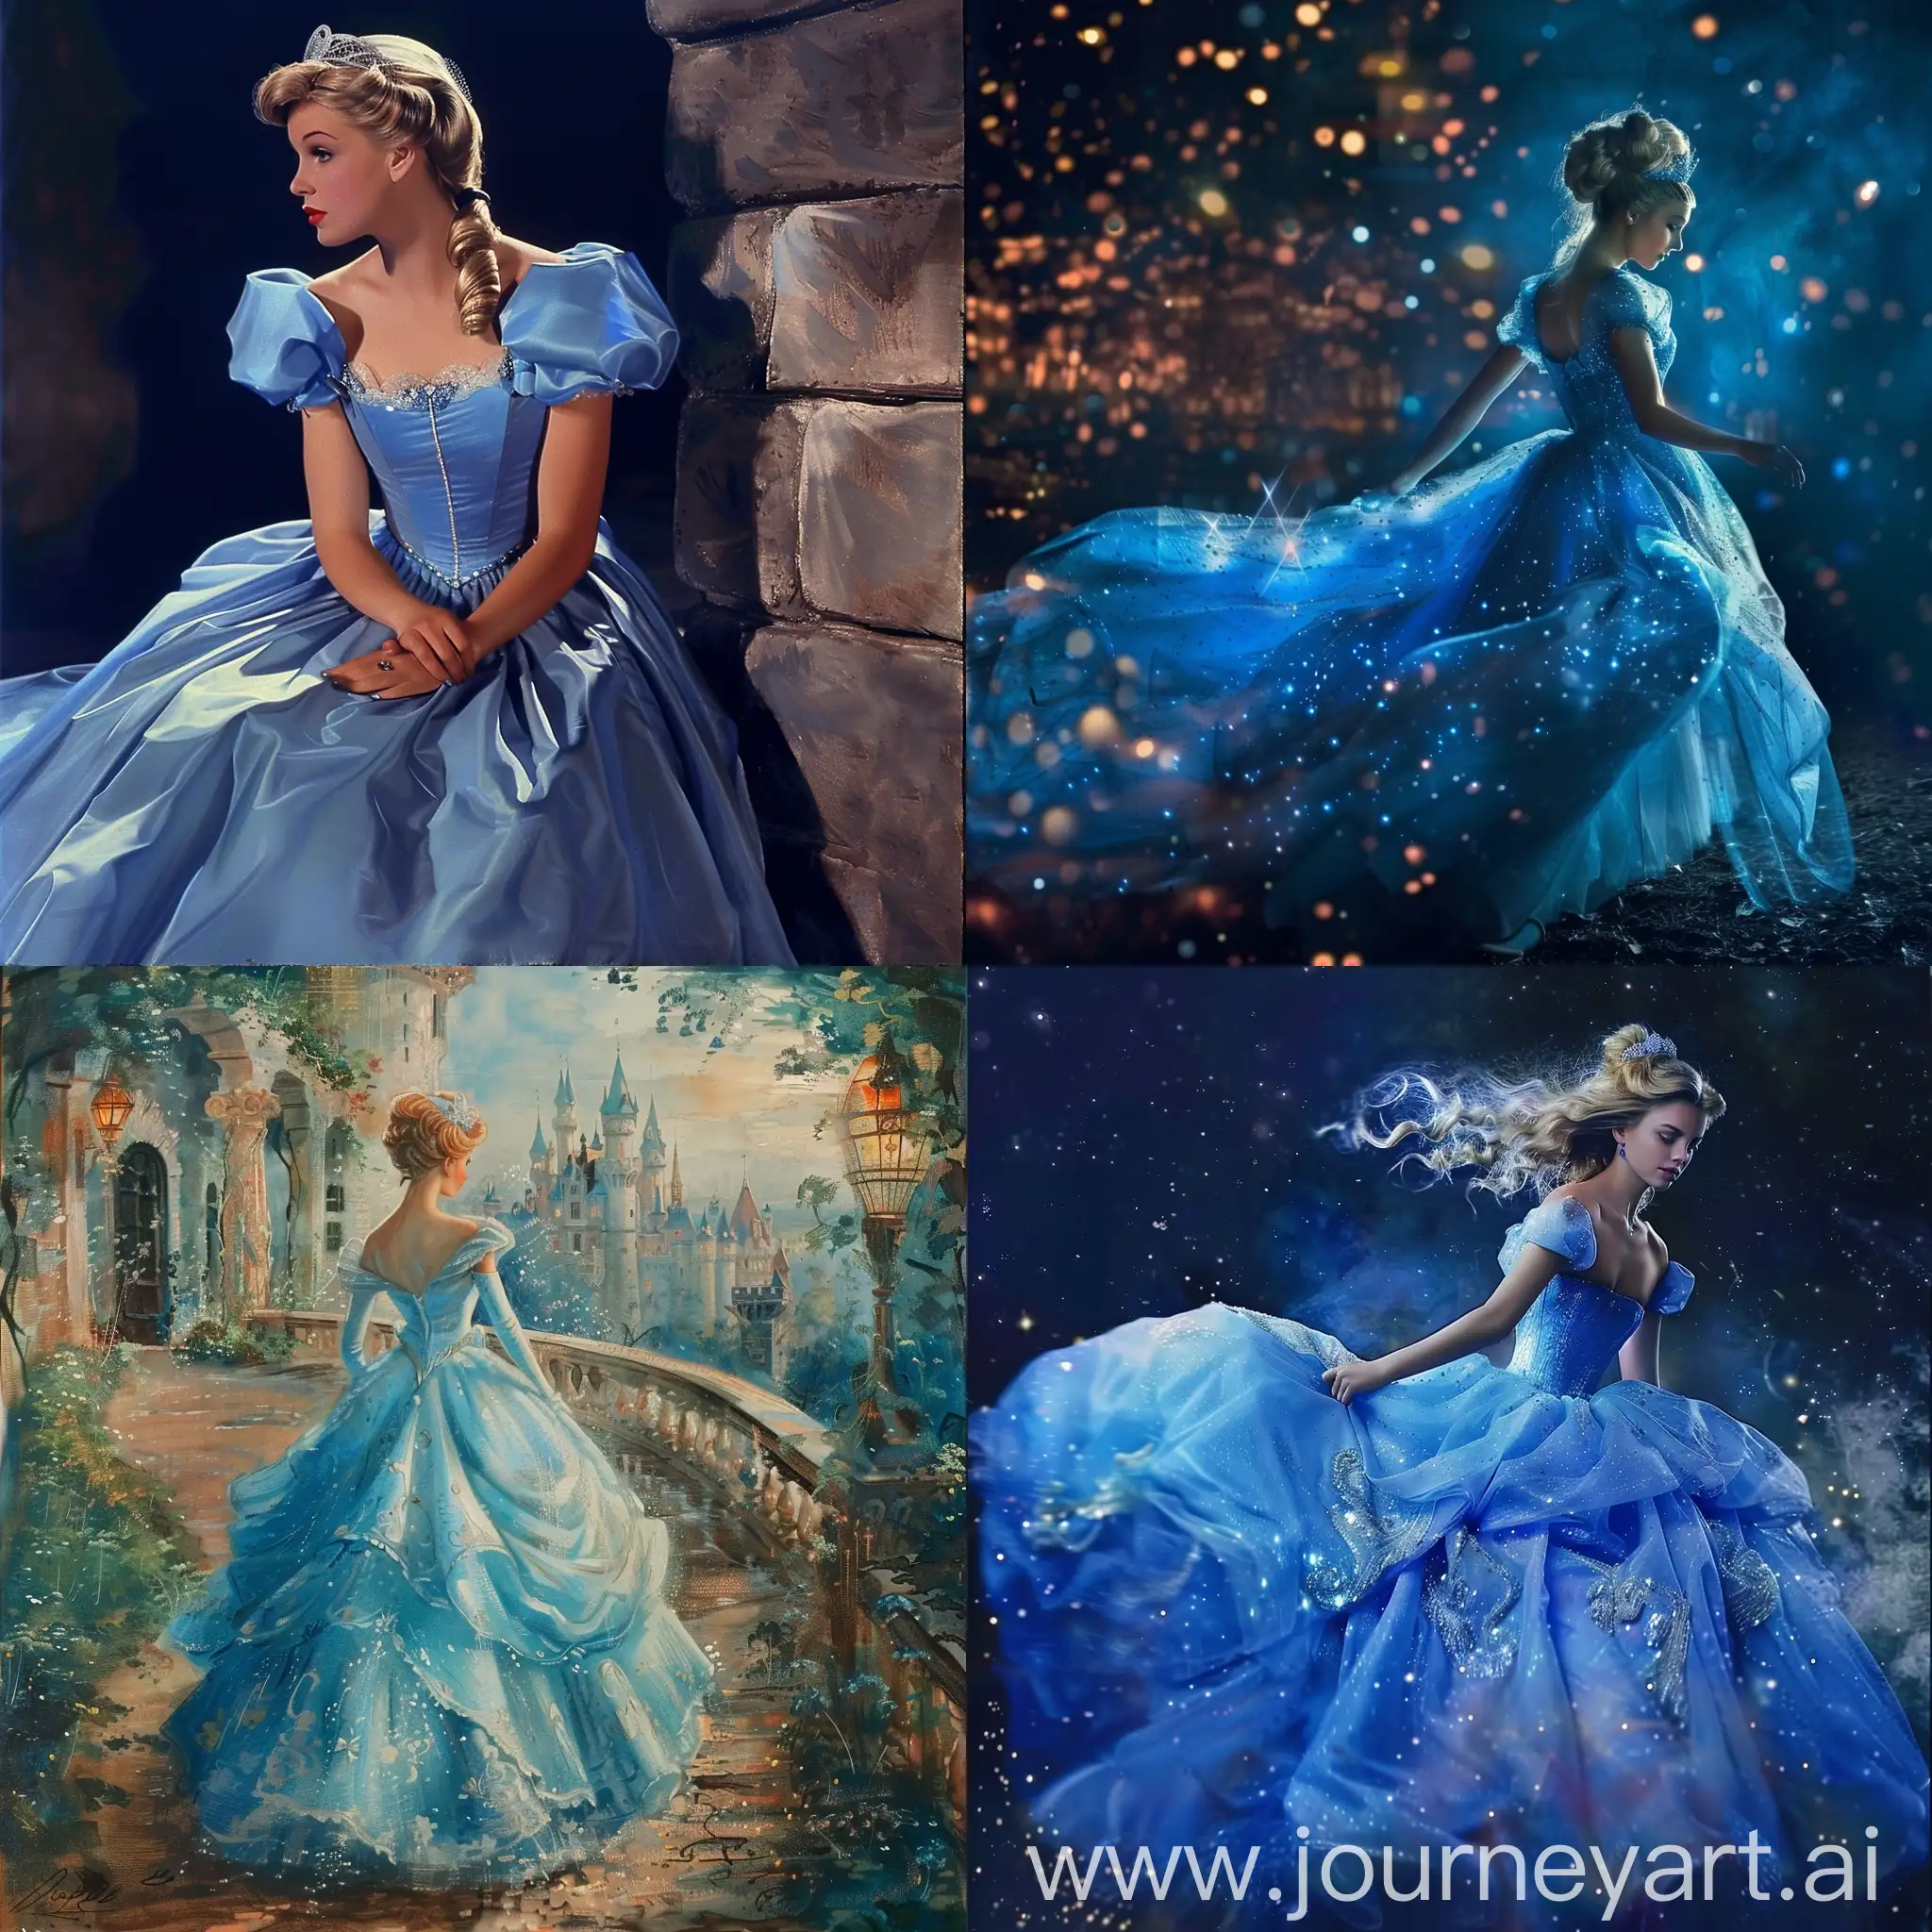 Enchanting-Cinderella-Portrait-in-Square-Format